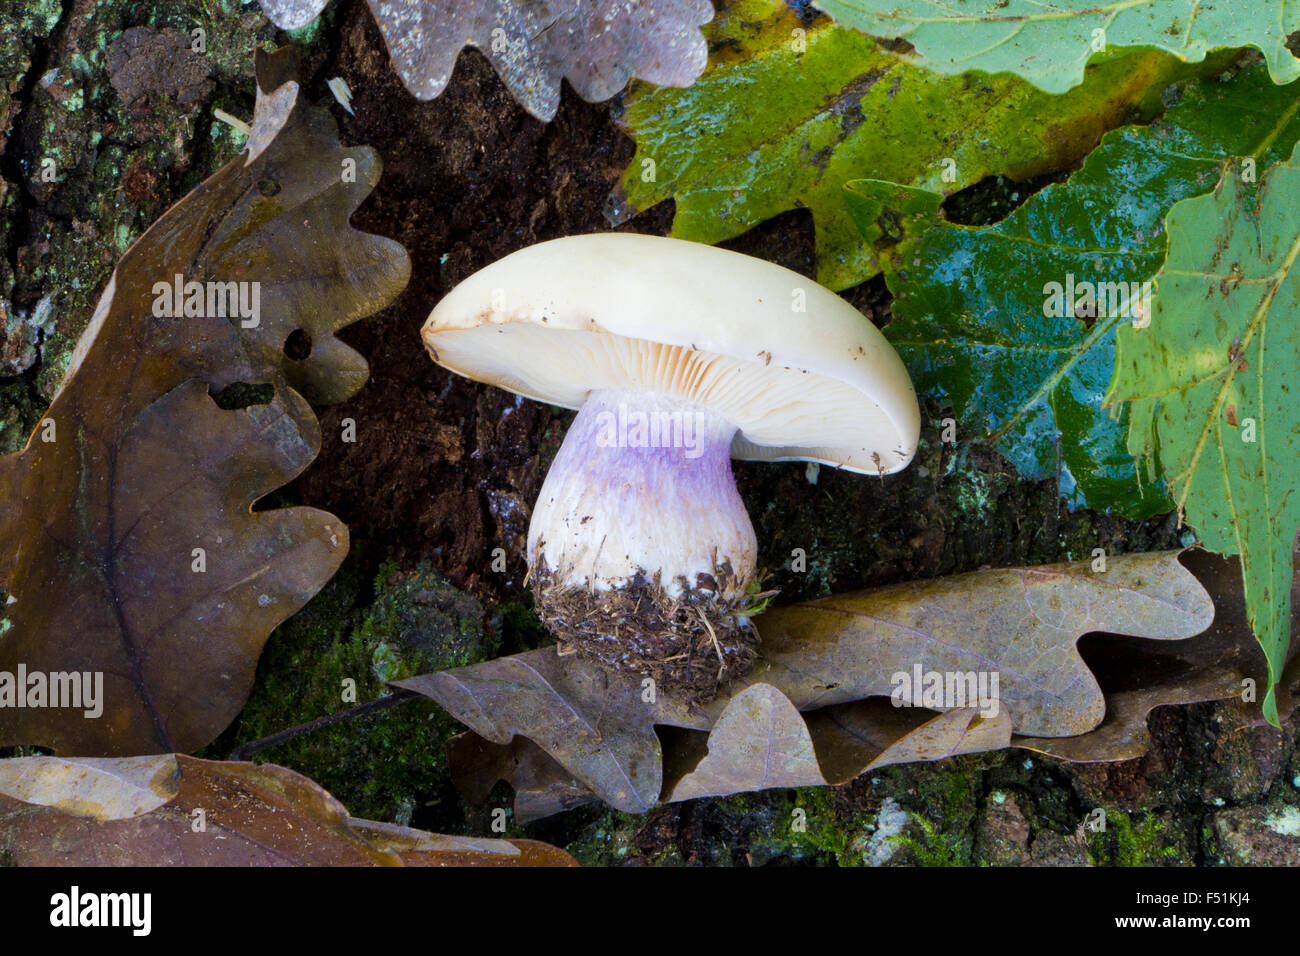 Lepista saeva fungo o Pied bleu i funghi commestibili Foto Stock